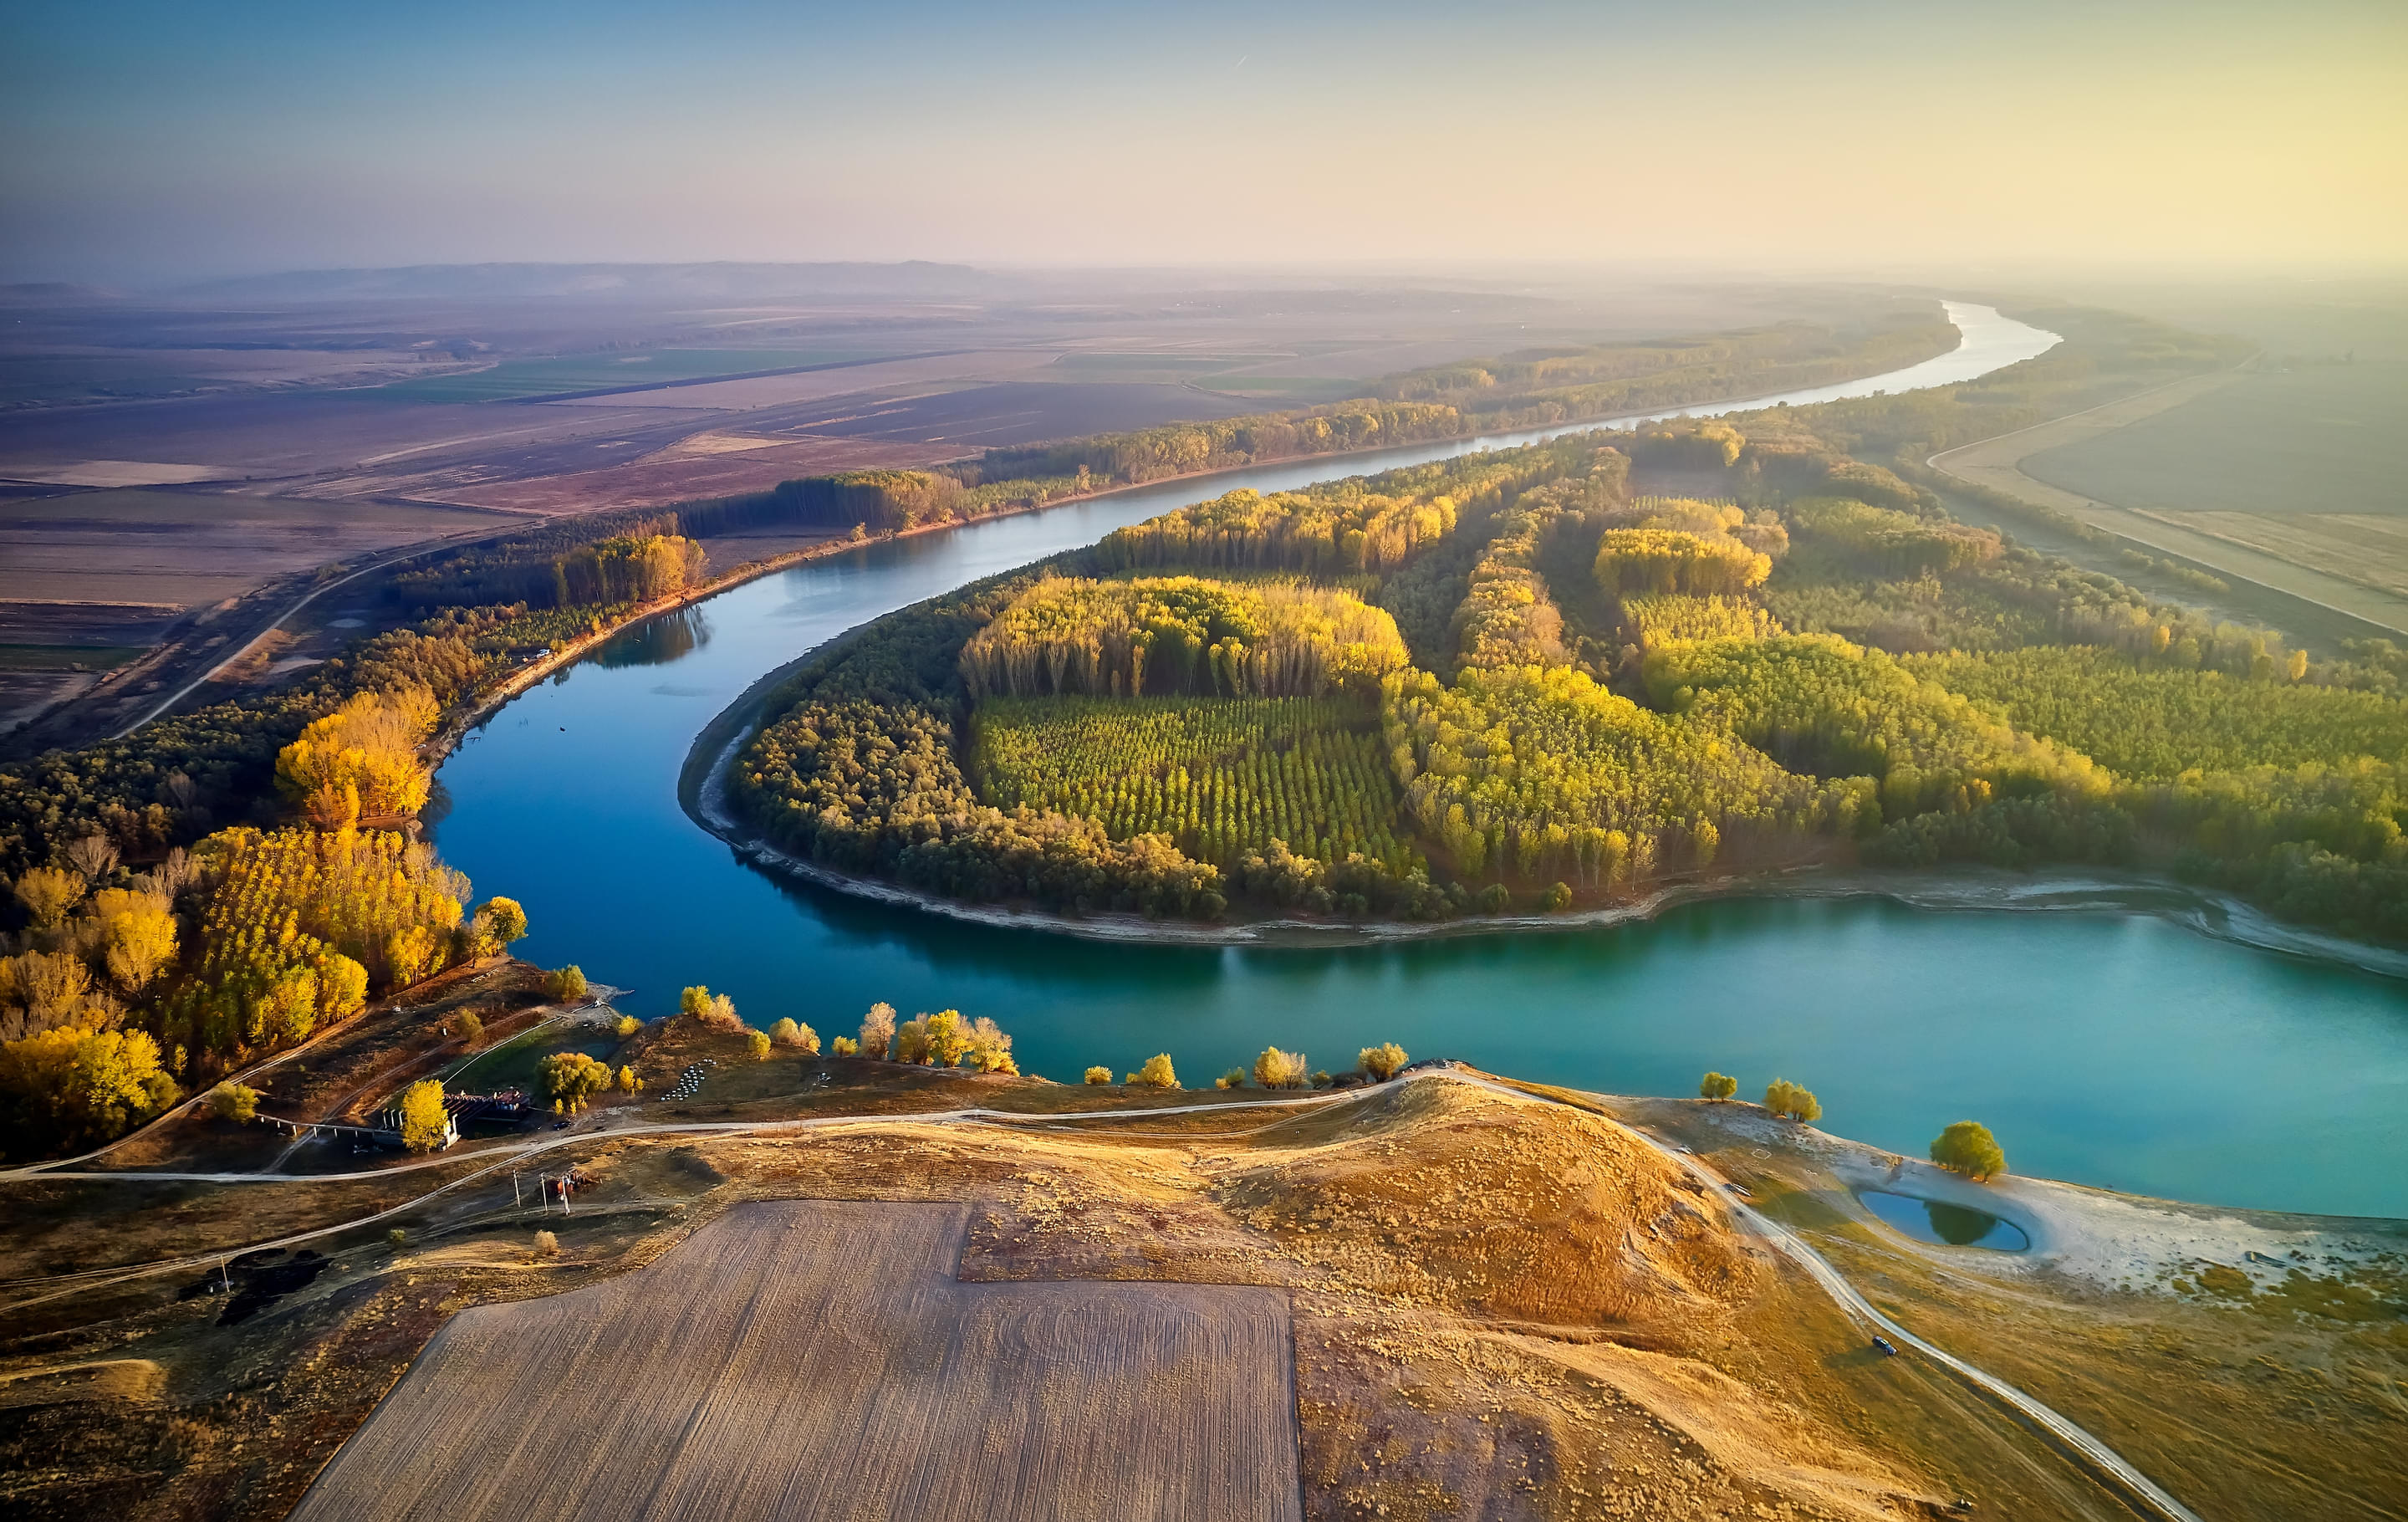 Danube Delta Overview